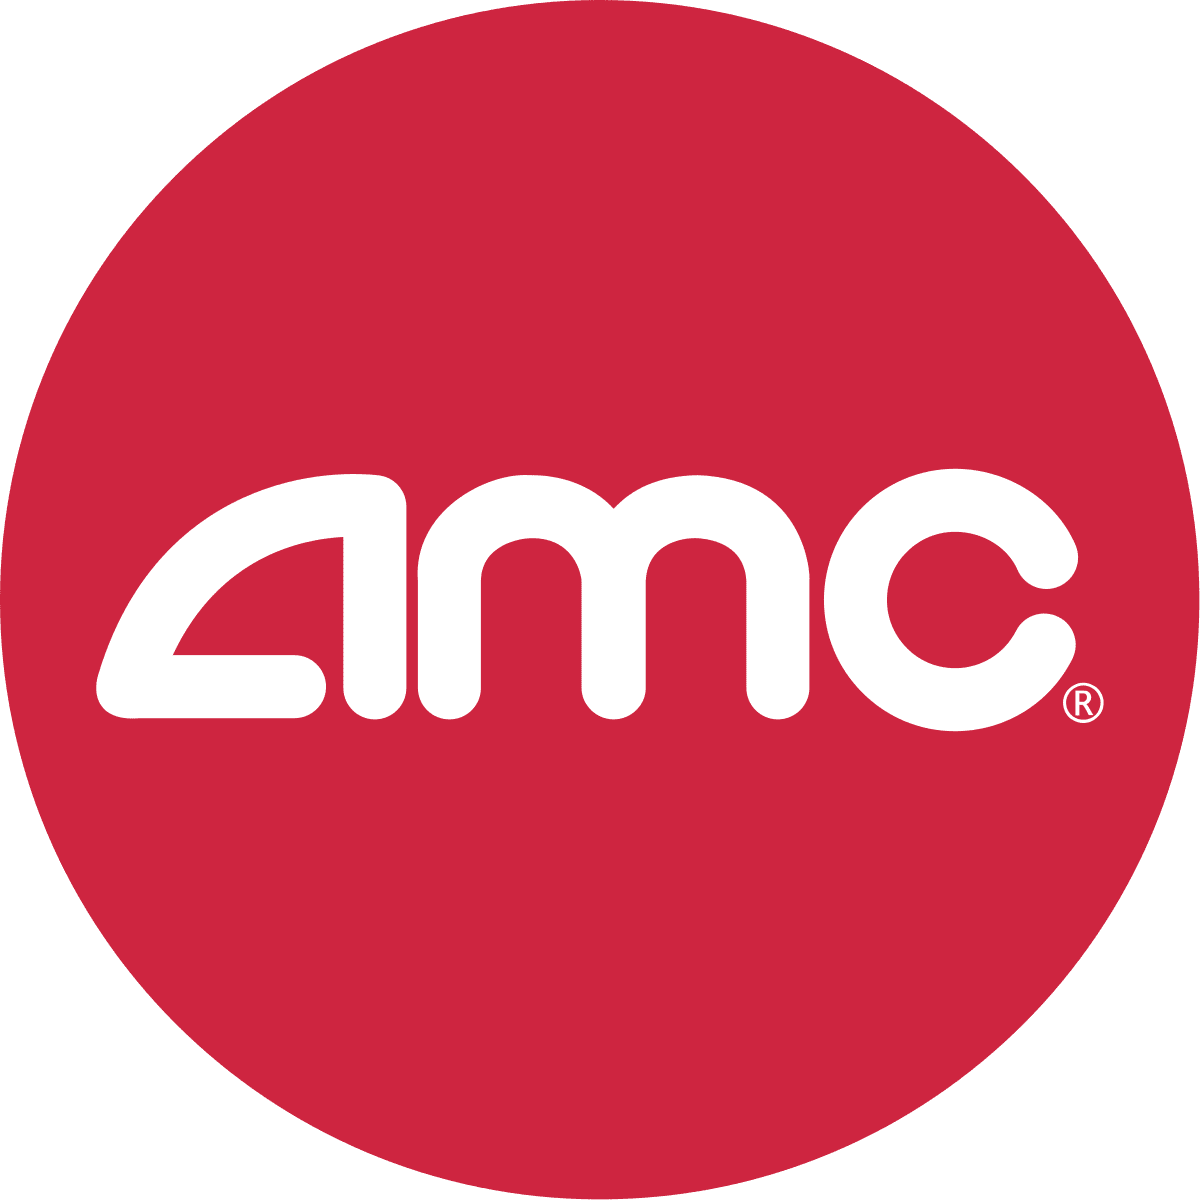 AMC Empire 25 Theater